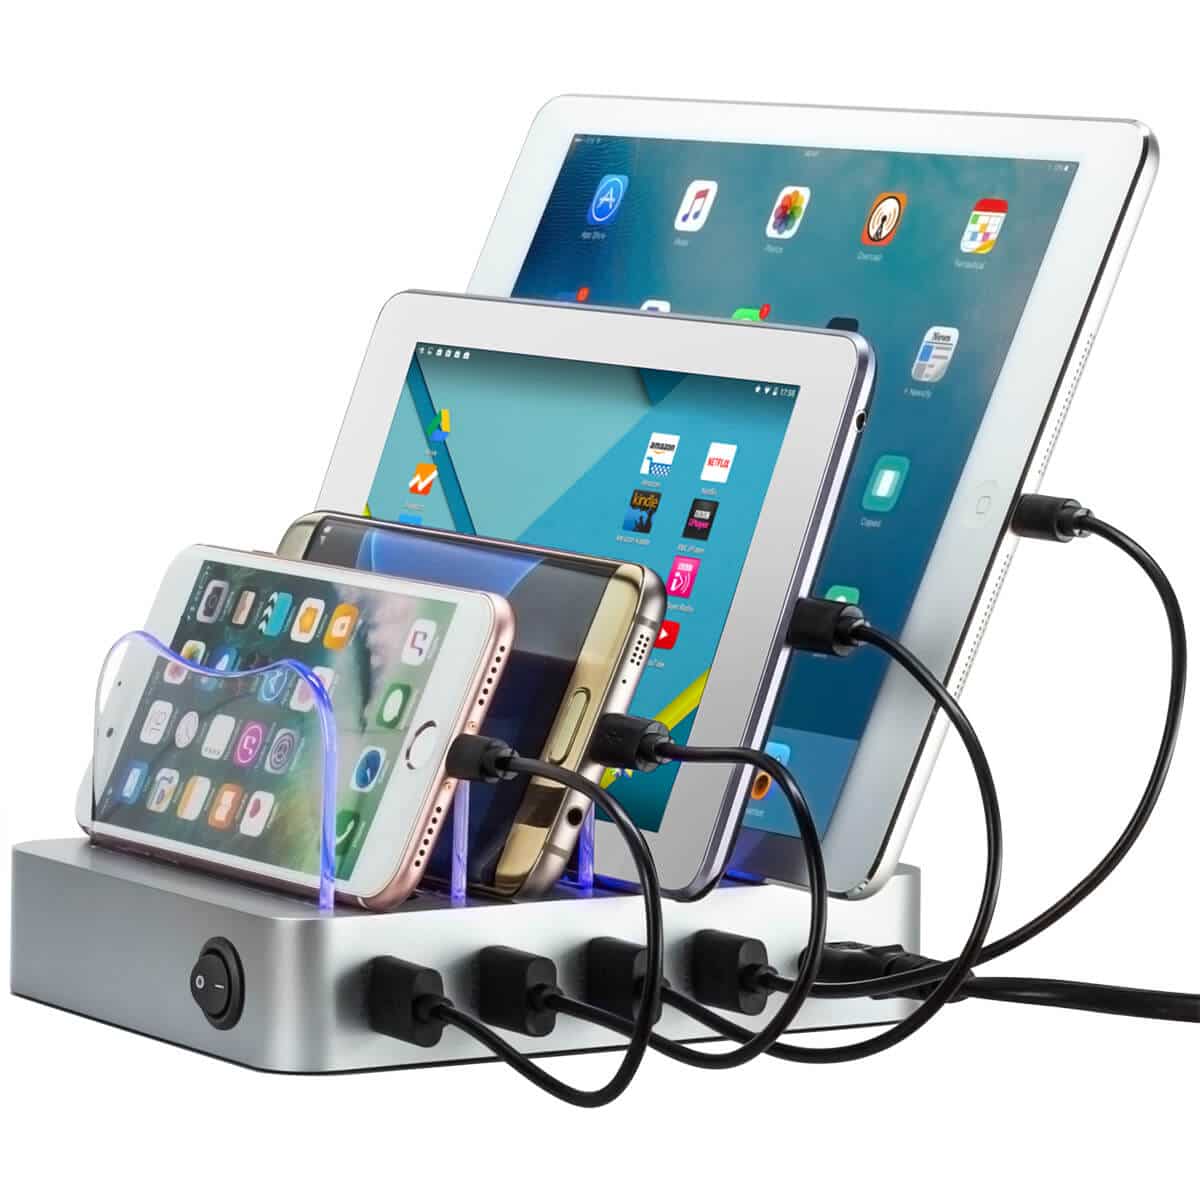 Simicore USB Charging Station